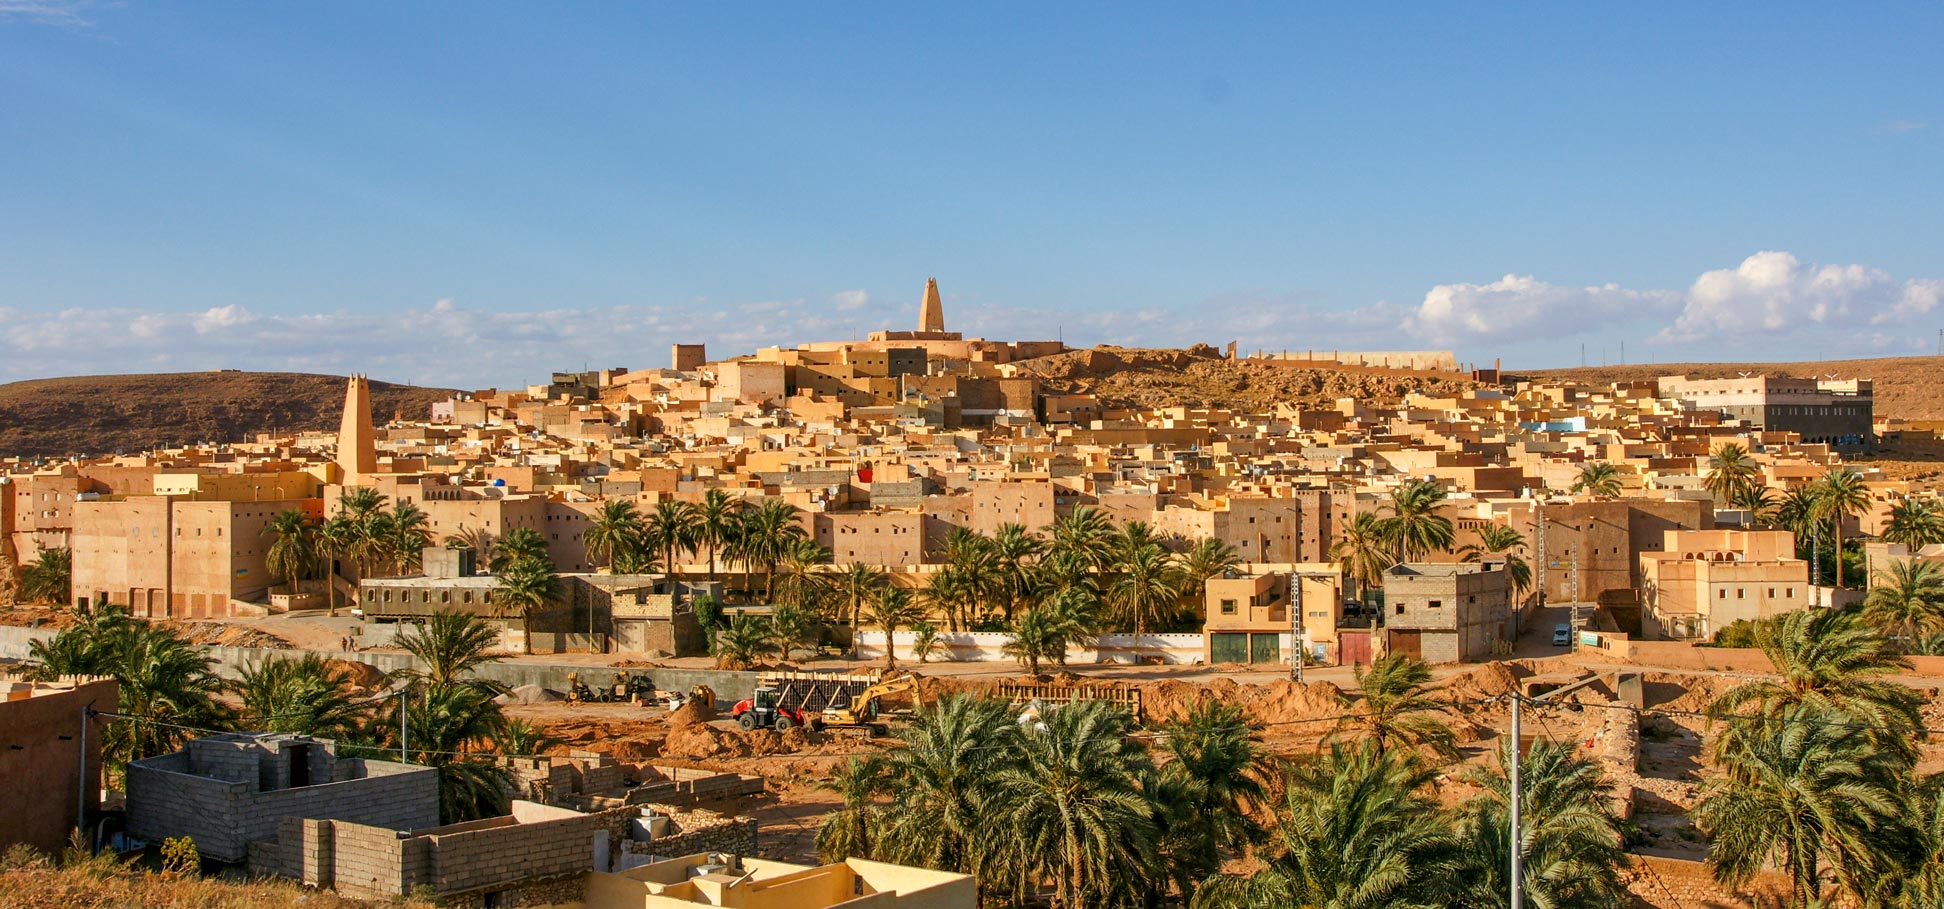 Beni Isguen, Ghardaïa, in the Algerian Sahara